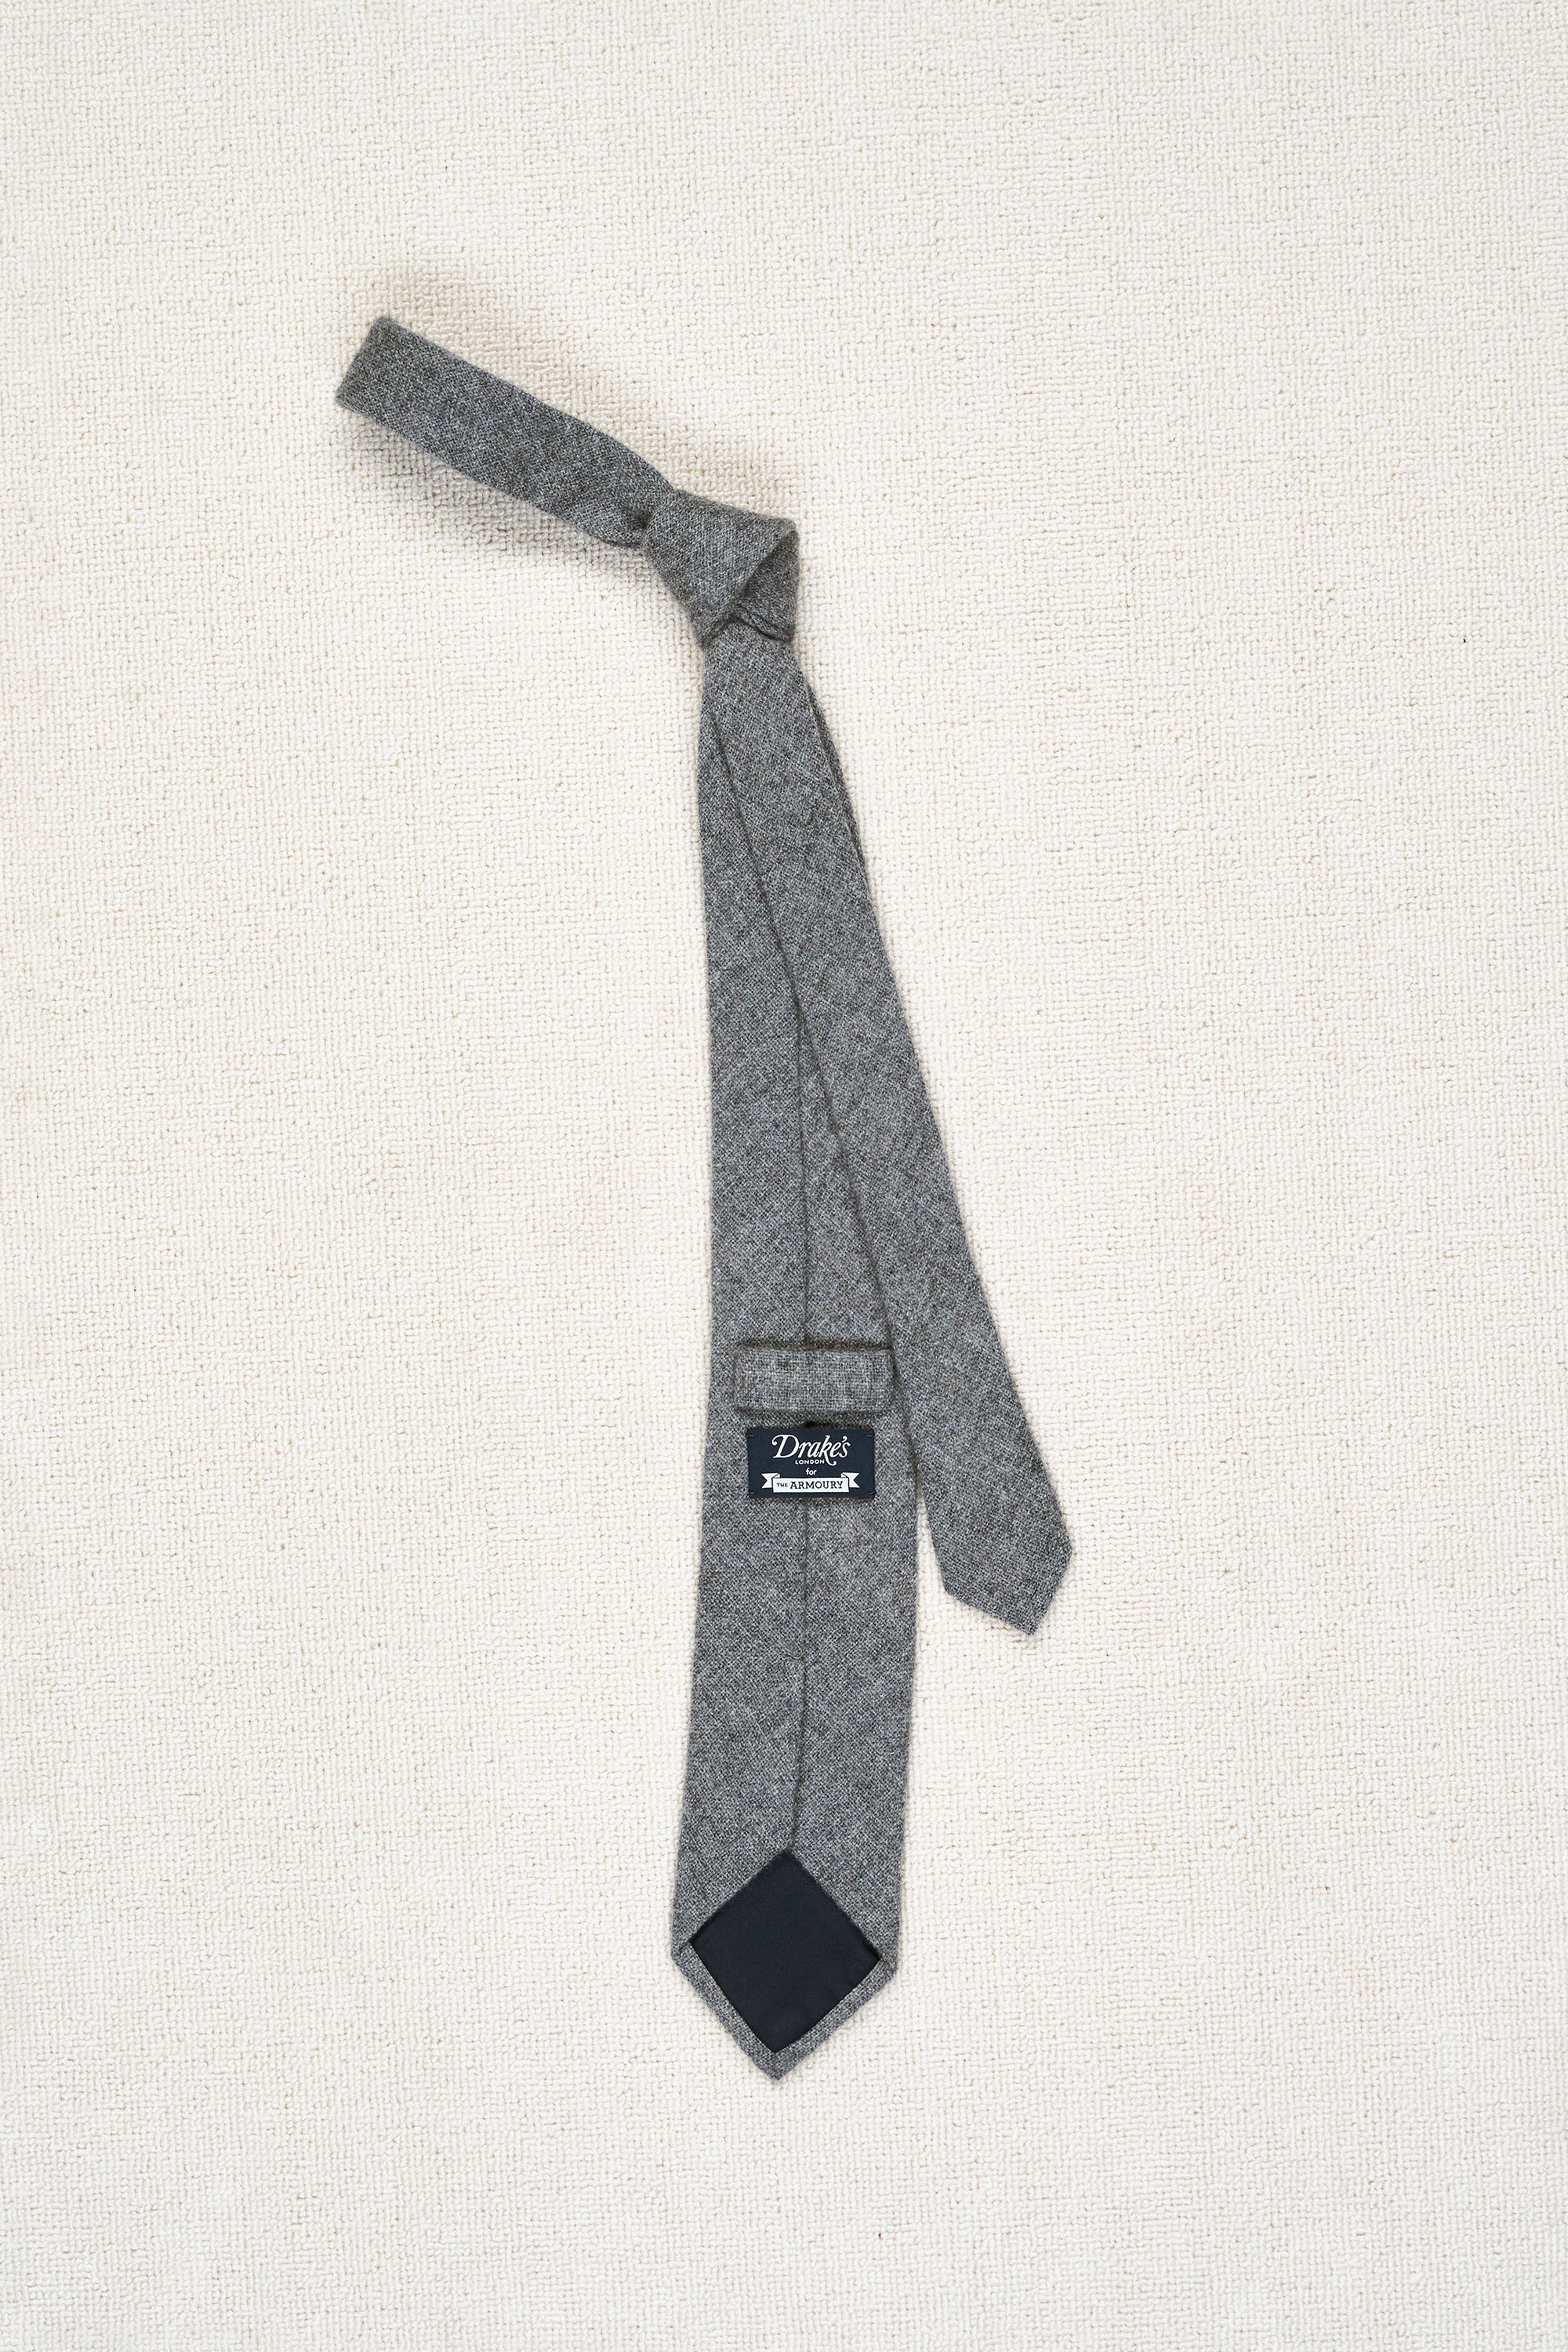 Drake's Grey Cashmere Tie